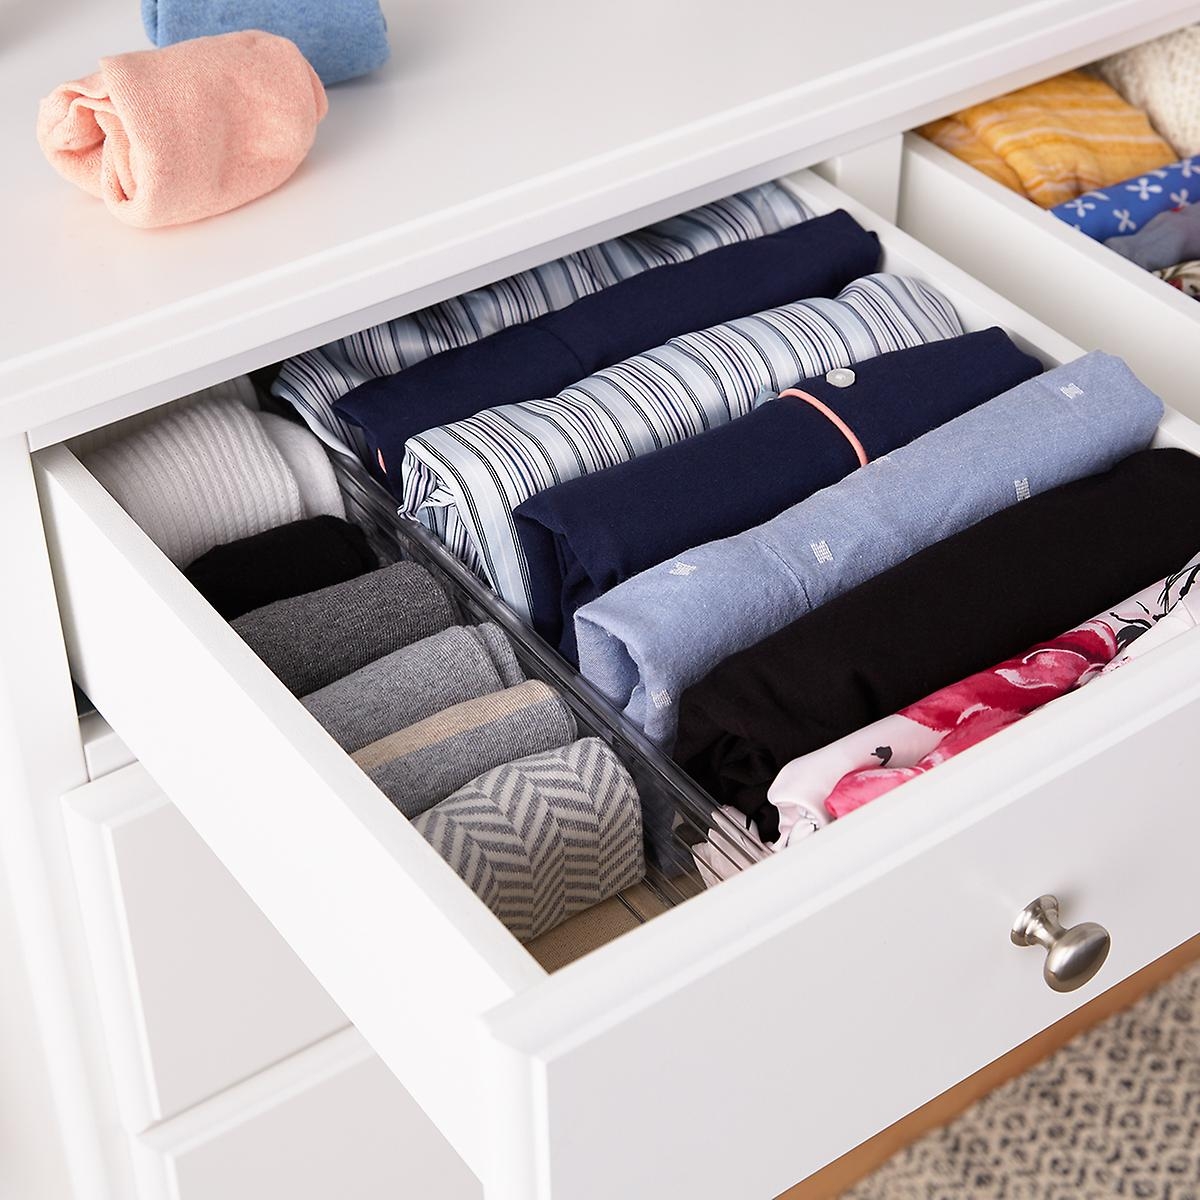 2614 how to organize wardrobe6